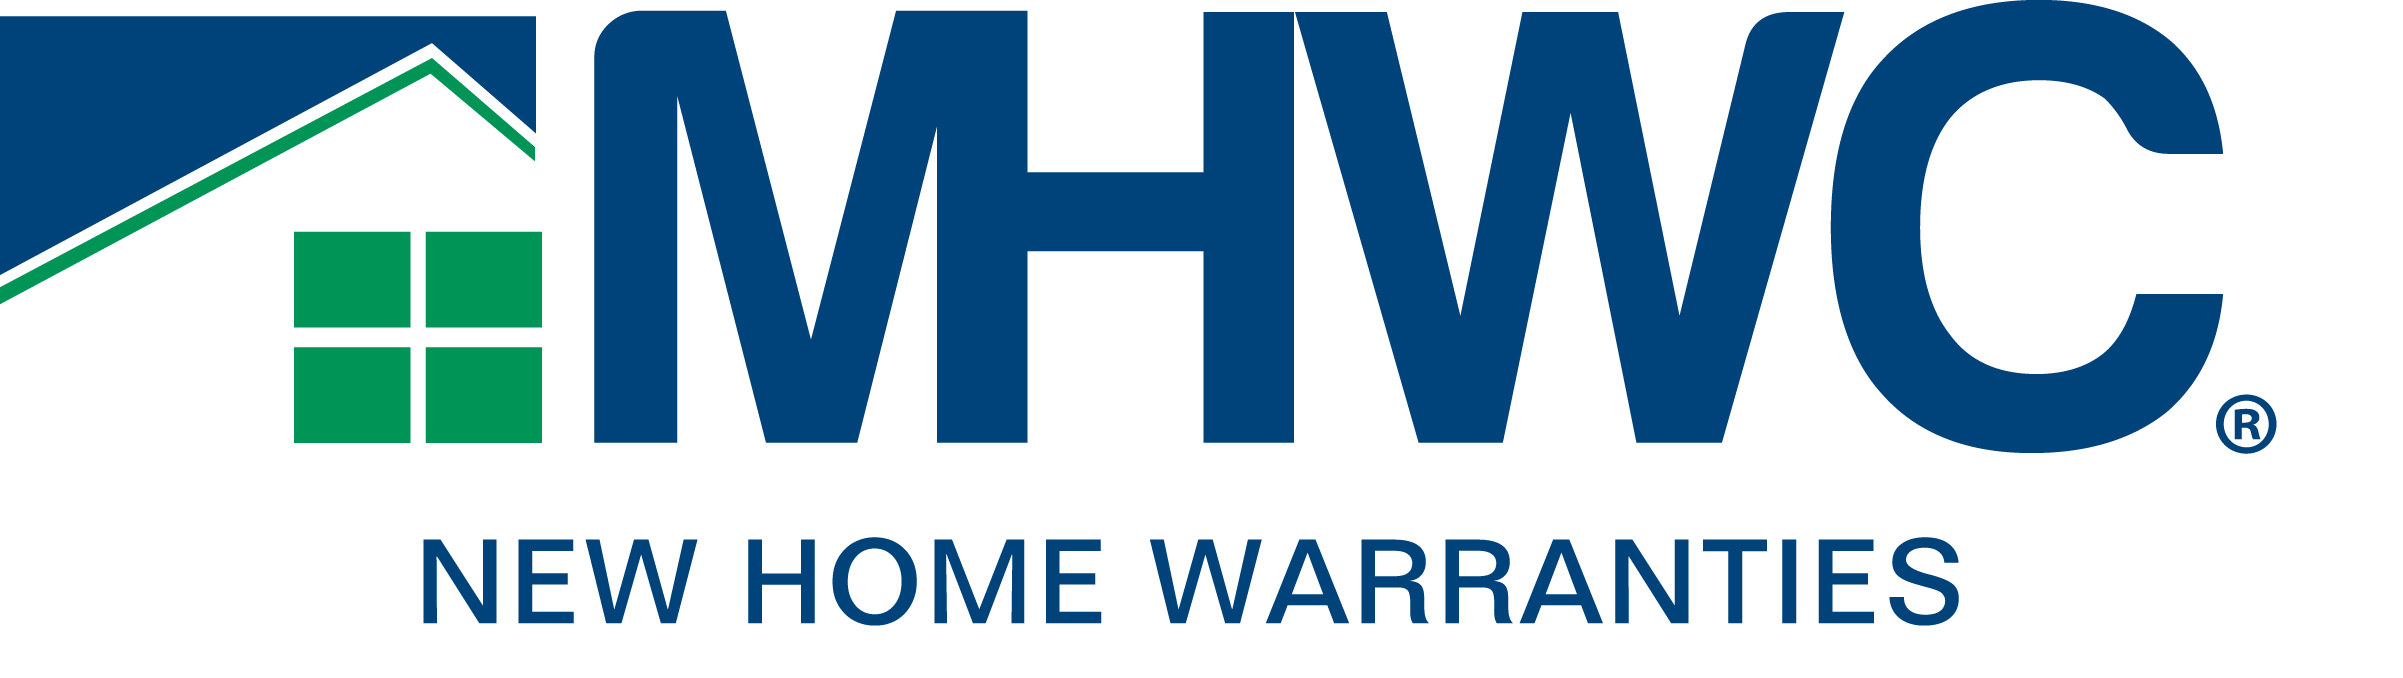 MHWC new home warranties logo